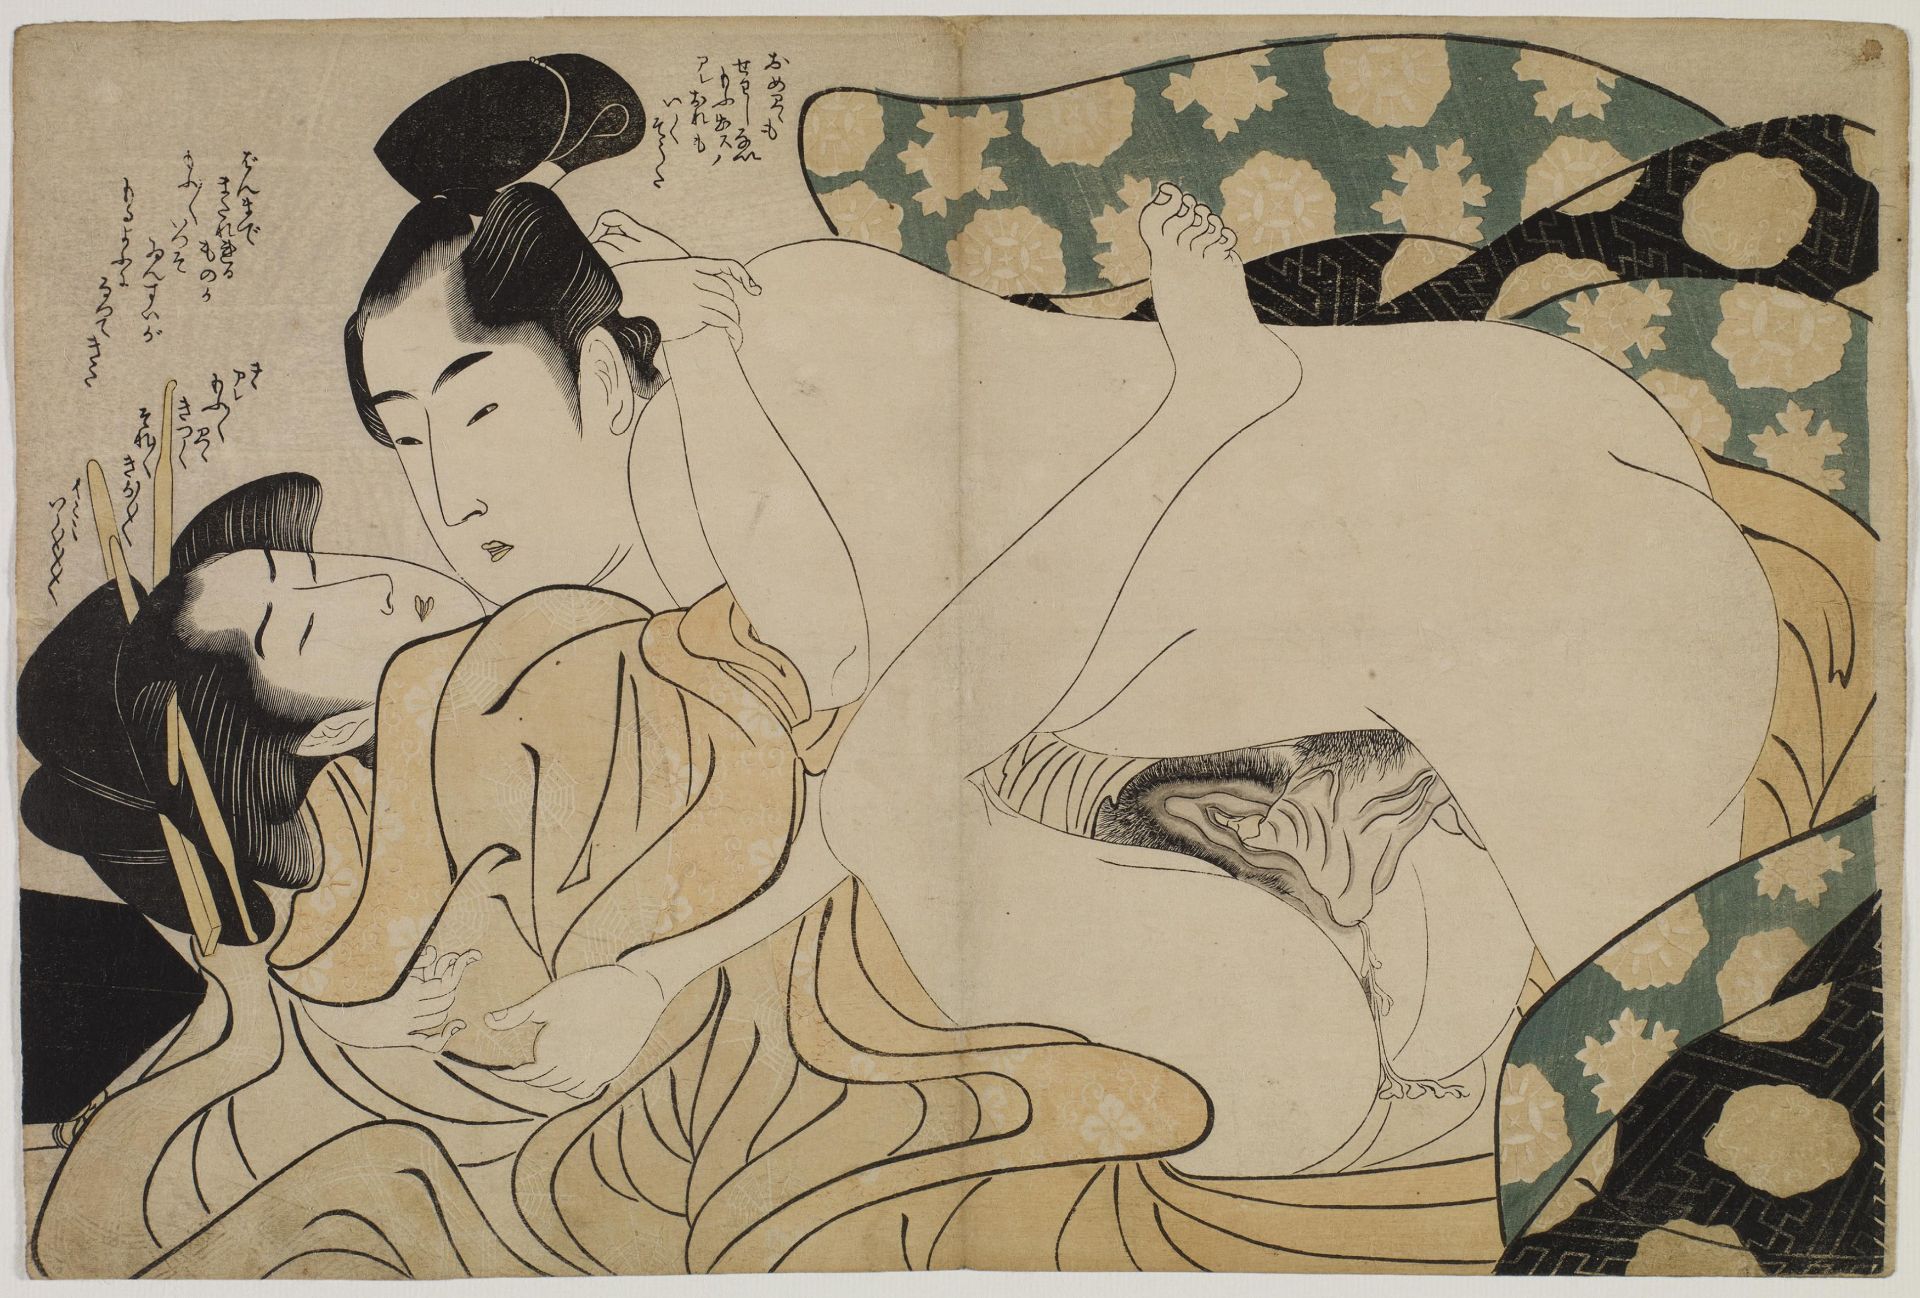 13 Blätter der Shunga-Serie "Fumi no kiyogaki" - Image 24 of 27